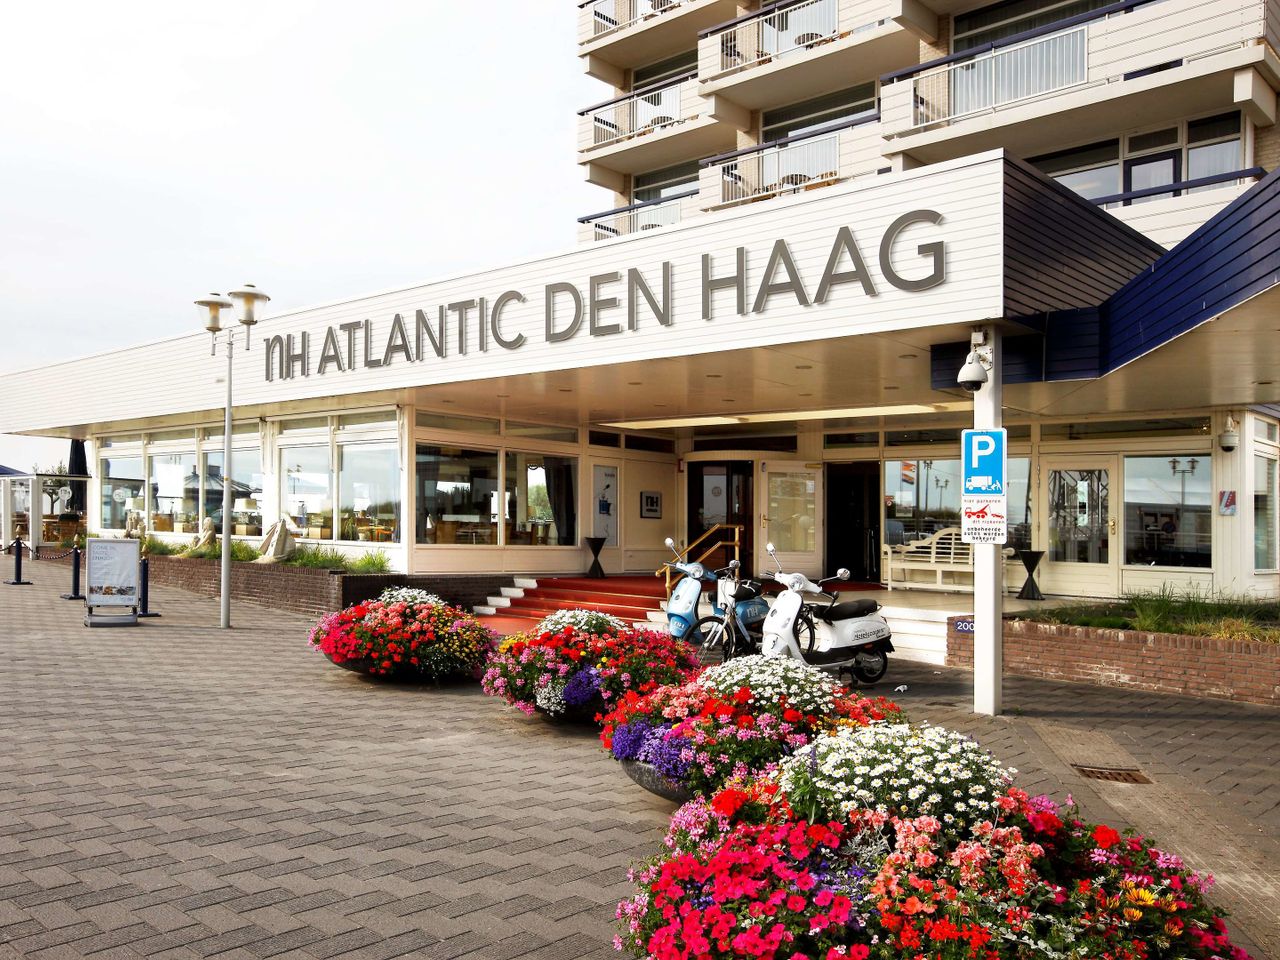 7 Tage im Hotel NH Atlantic Den Haag 